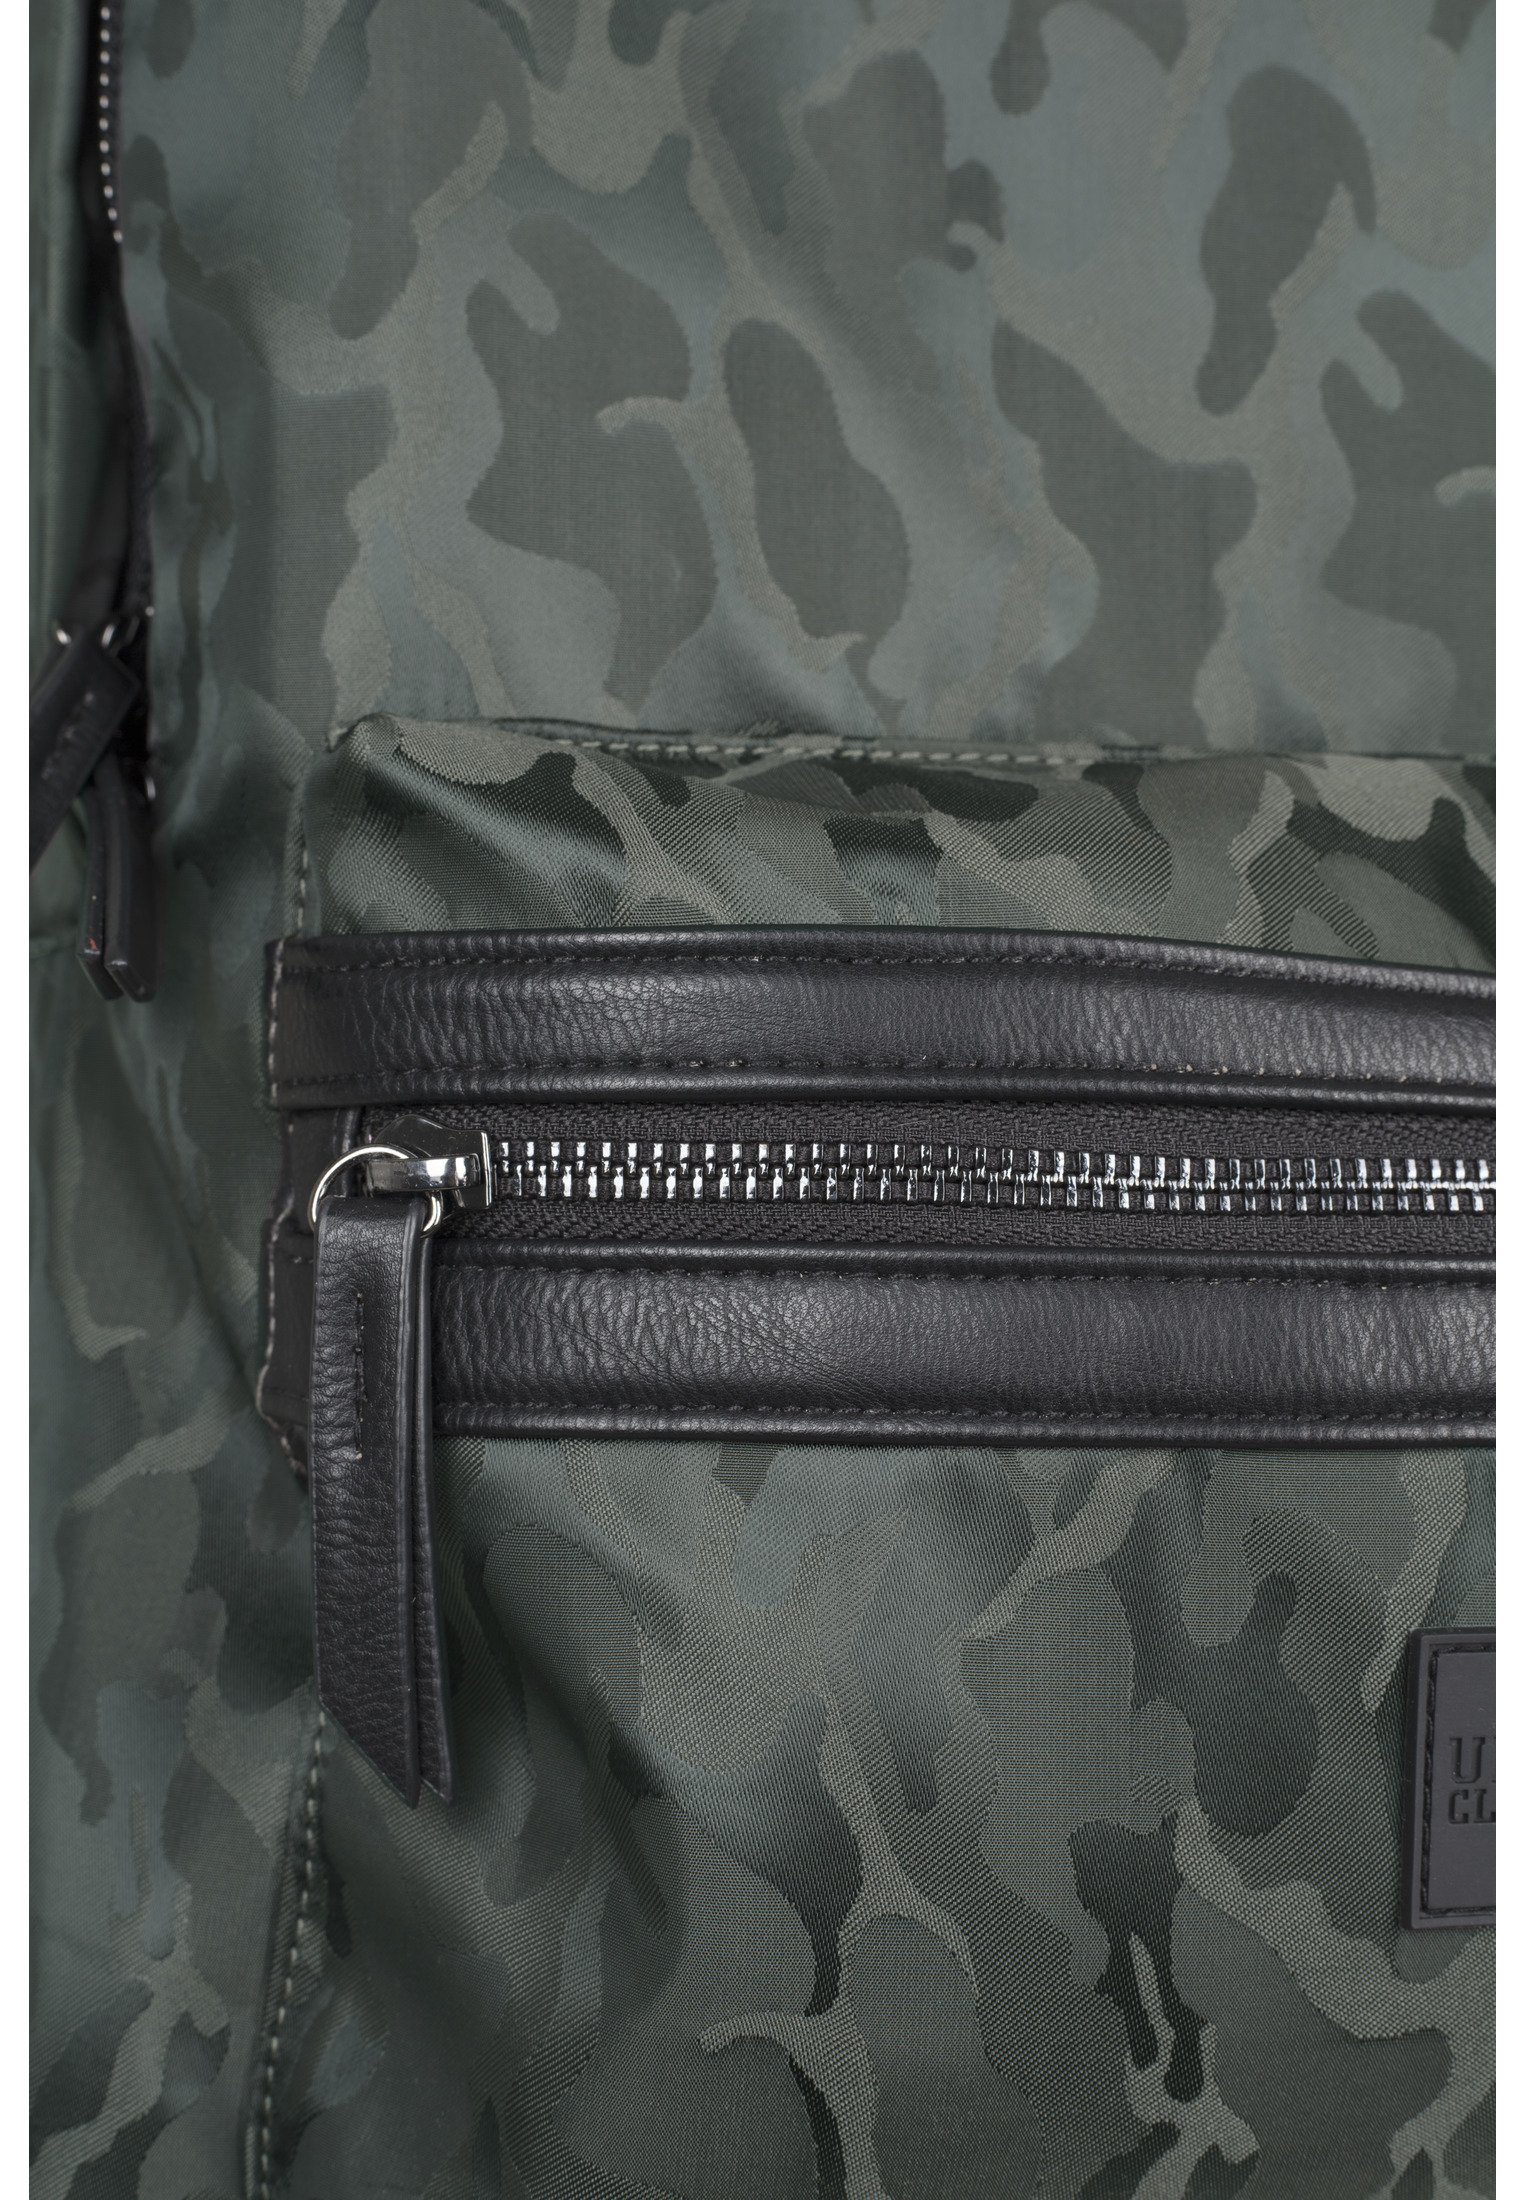 Taschen Camo Jacquard Backpack in Farbe dark olive camo